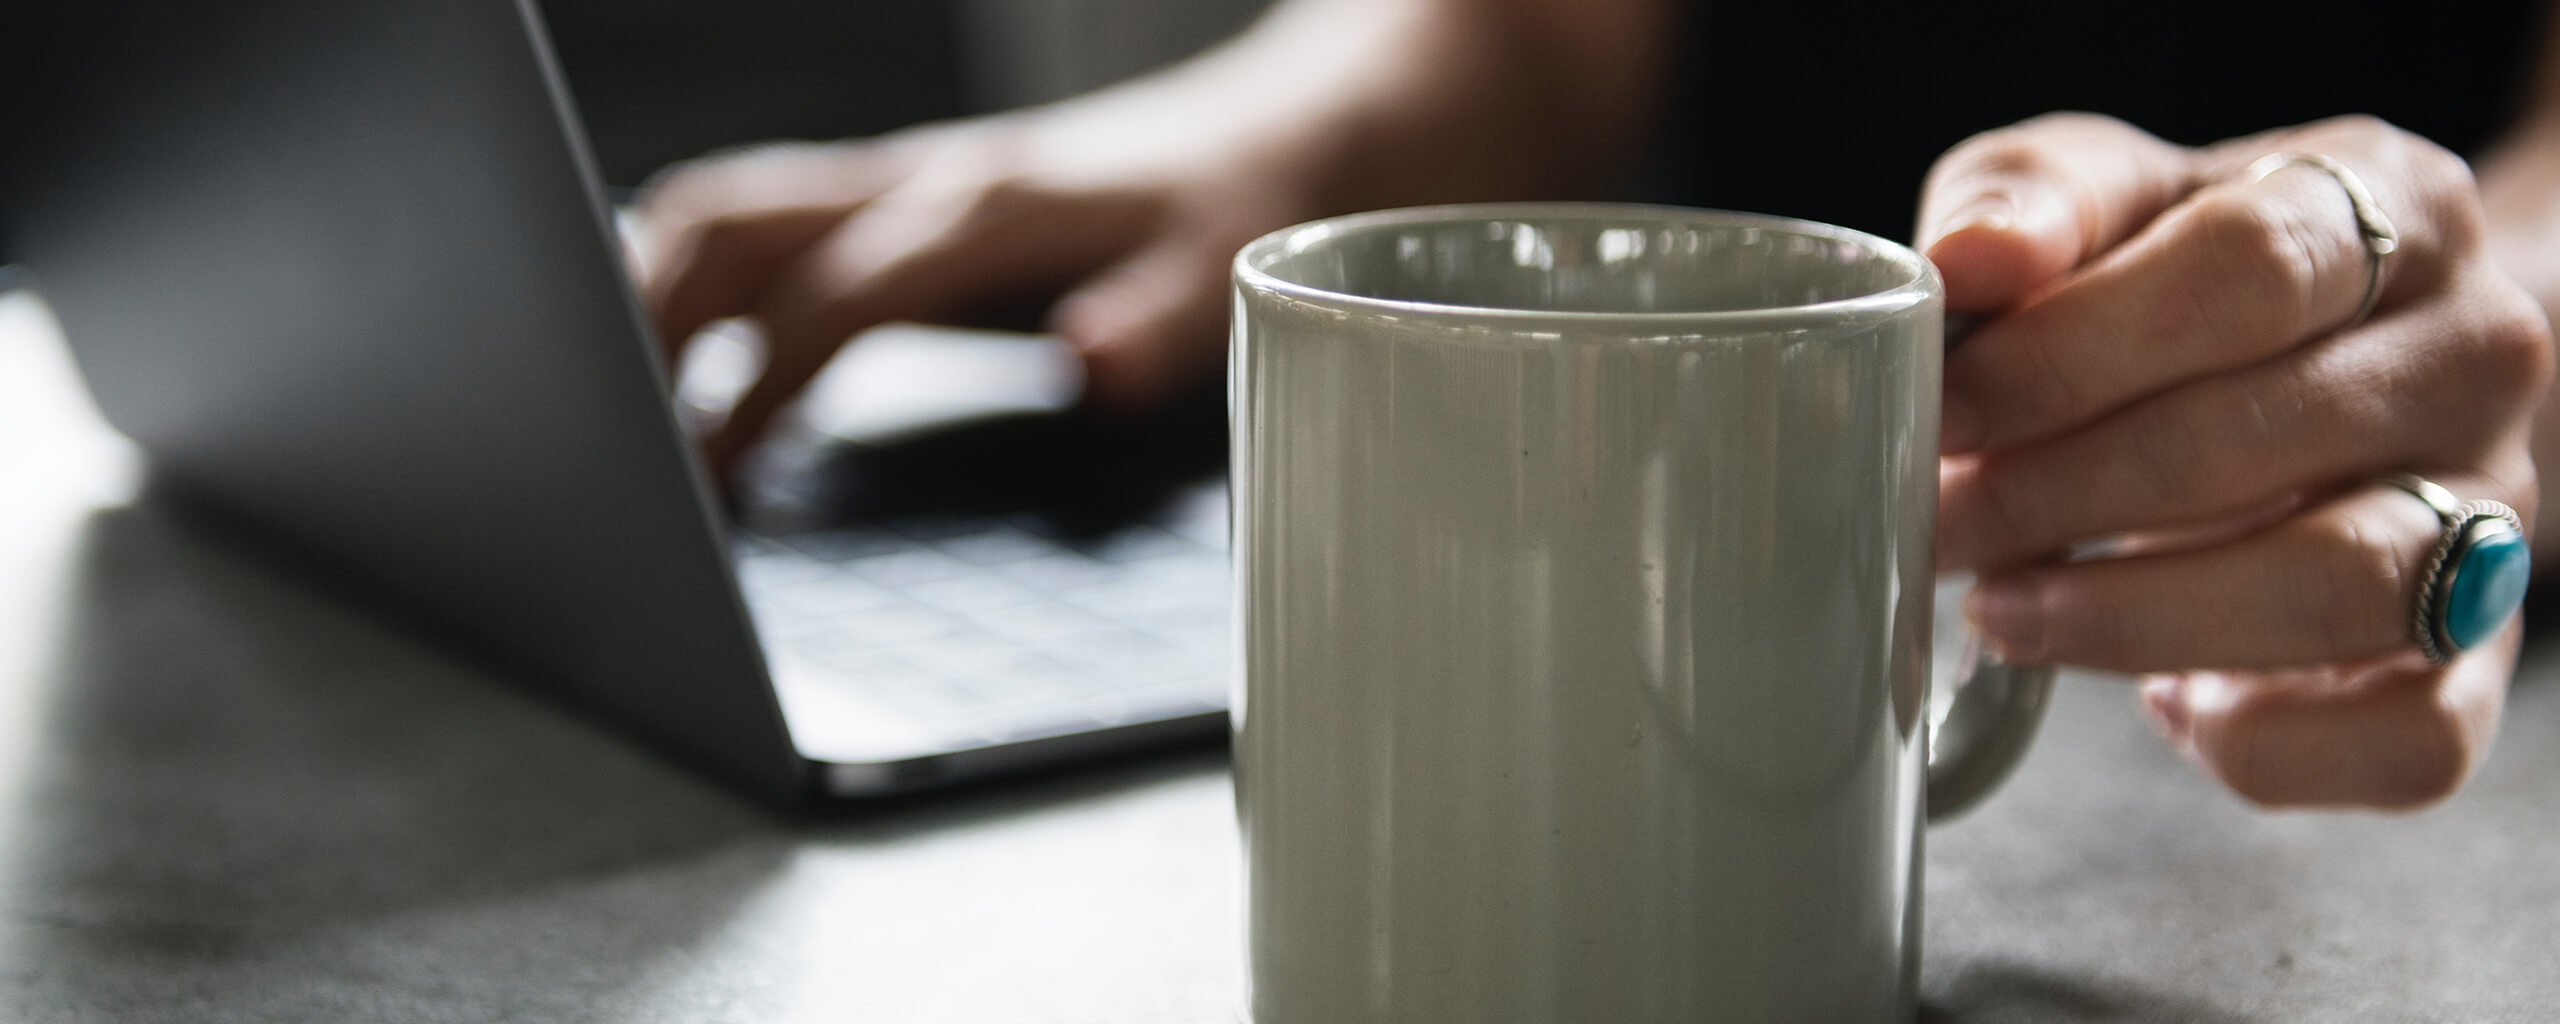 laptop and a coffee mug